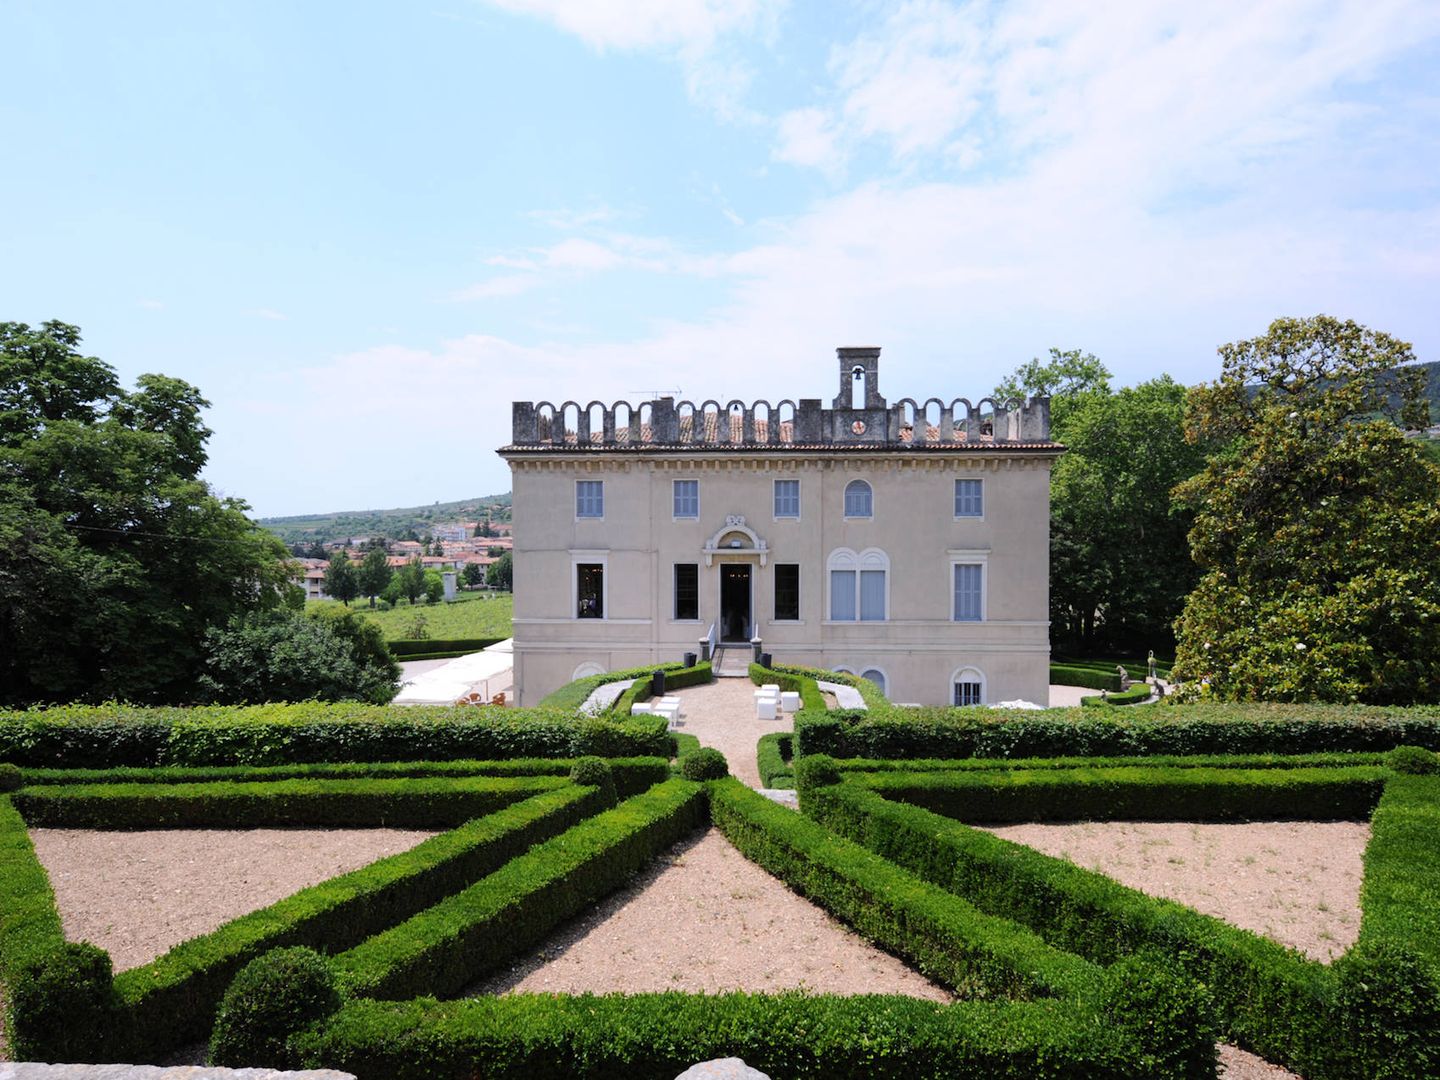 Una vista de Villa Rizzardi, hogar de Miguel Berrocal cerca de Verona. 